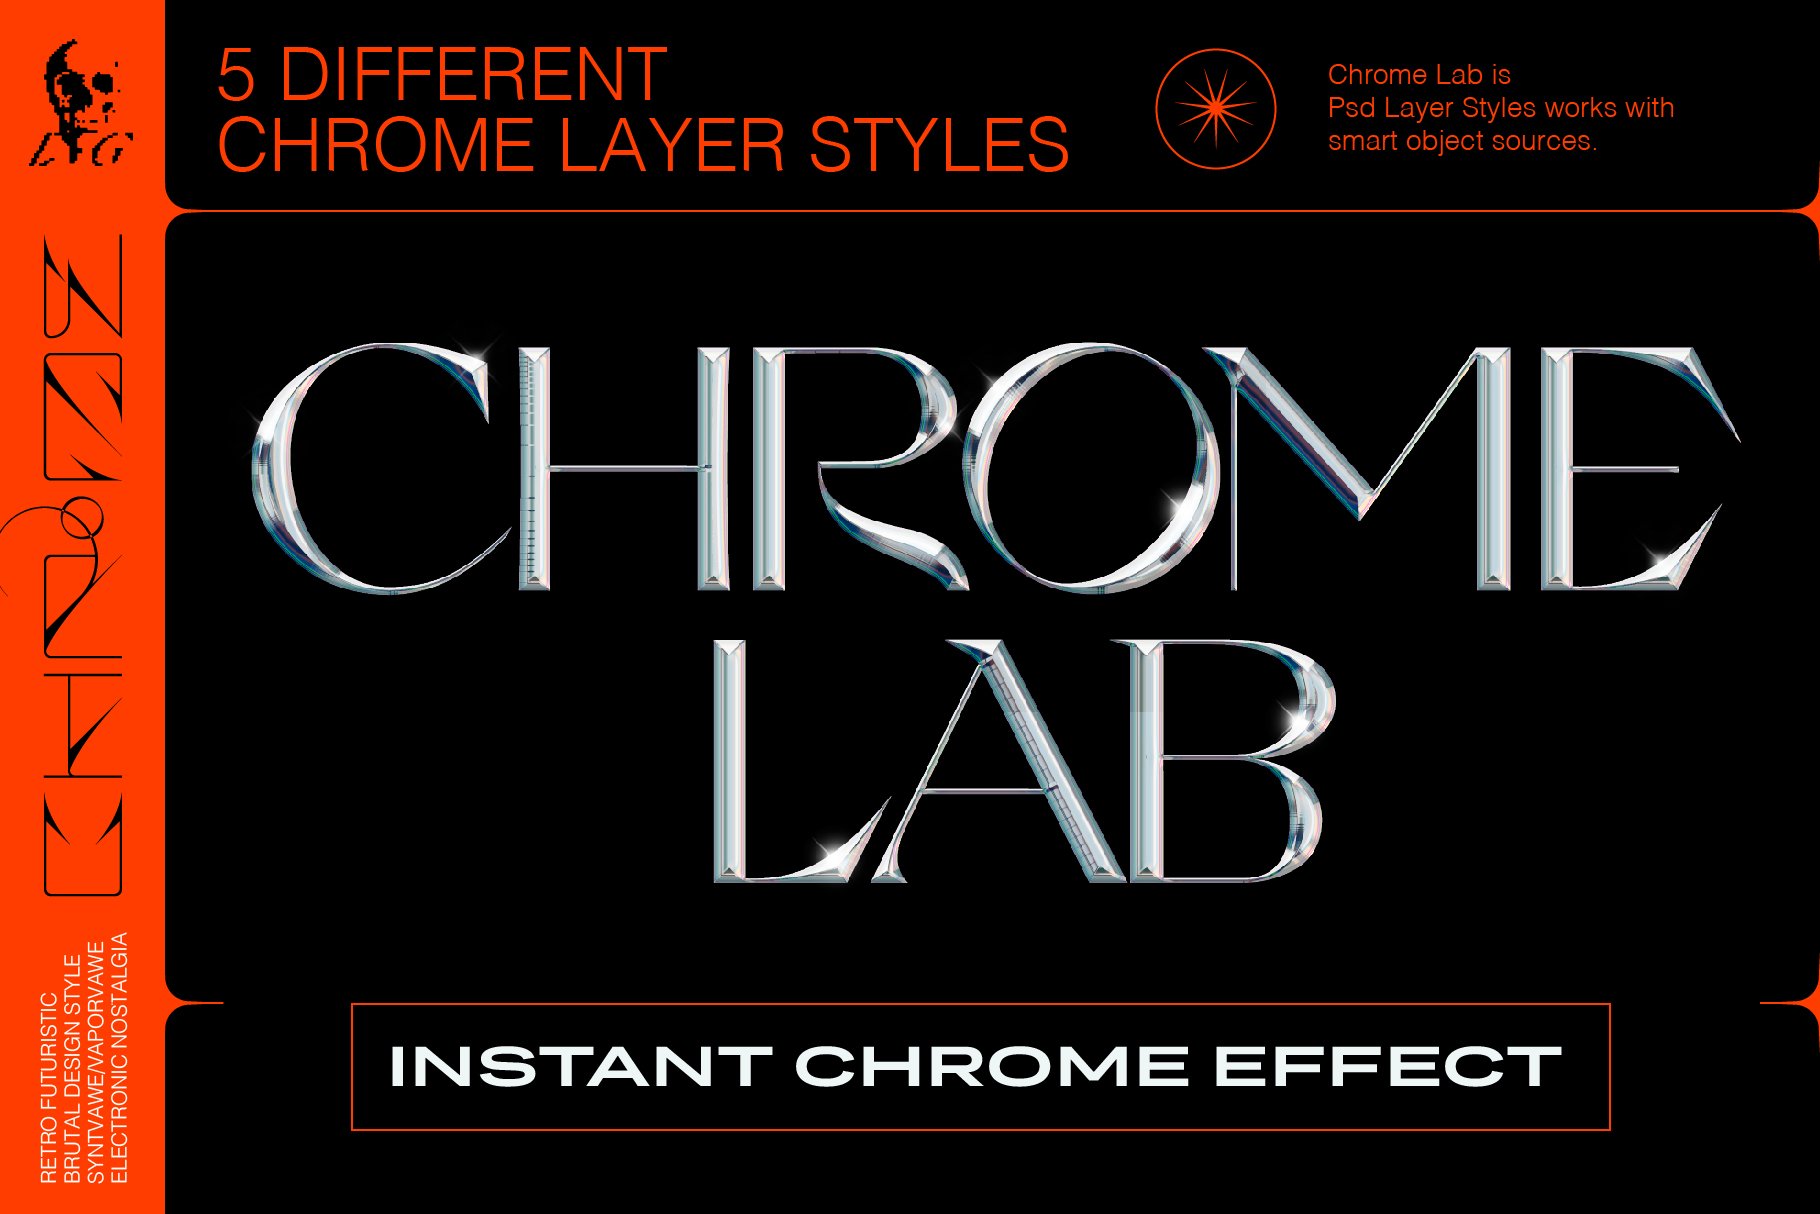 Chrome Labcover image.